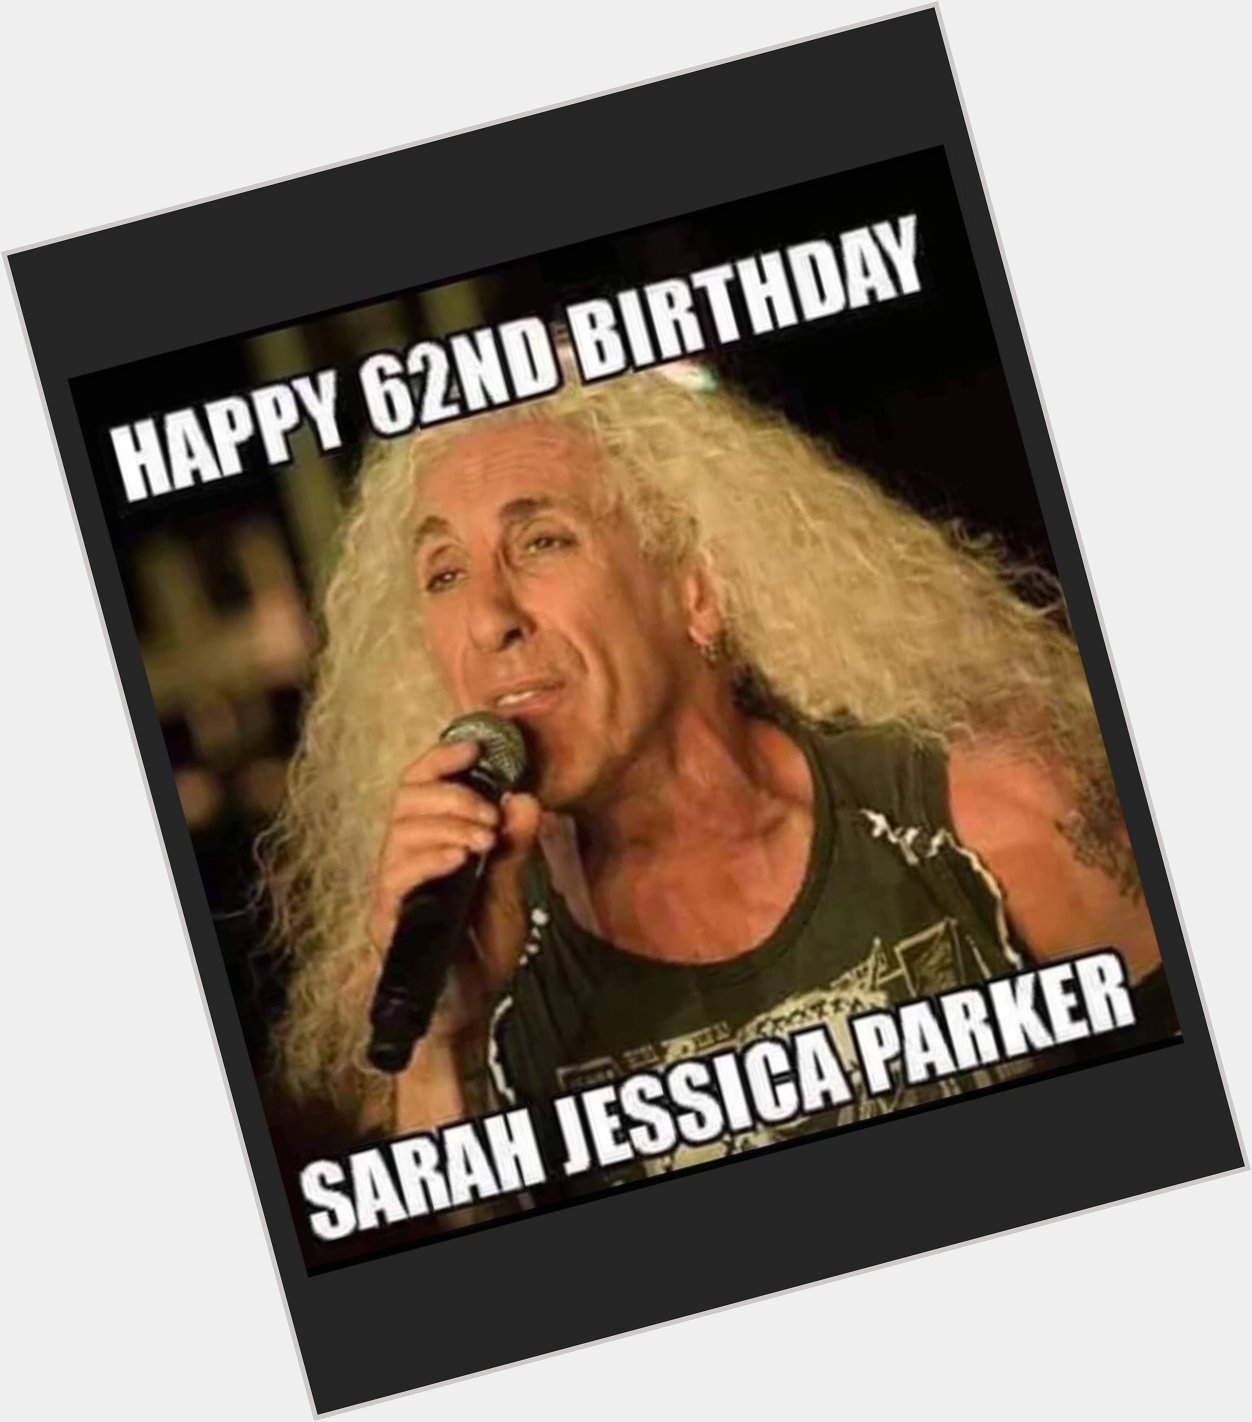 \"Happy 62nd birthday Sarah Jessica Parker\"

(8/11) 